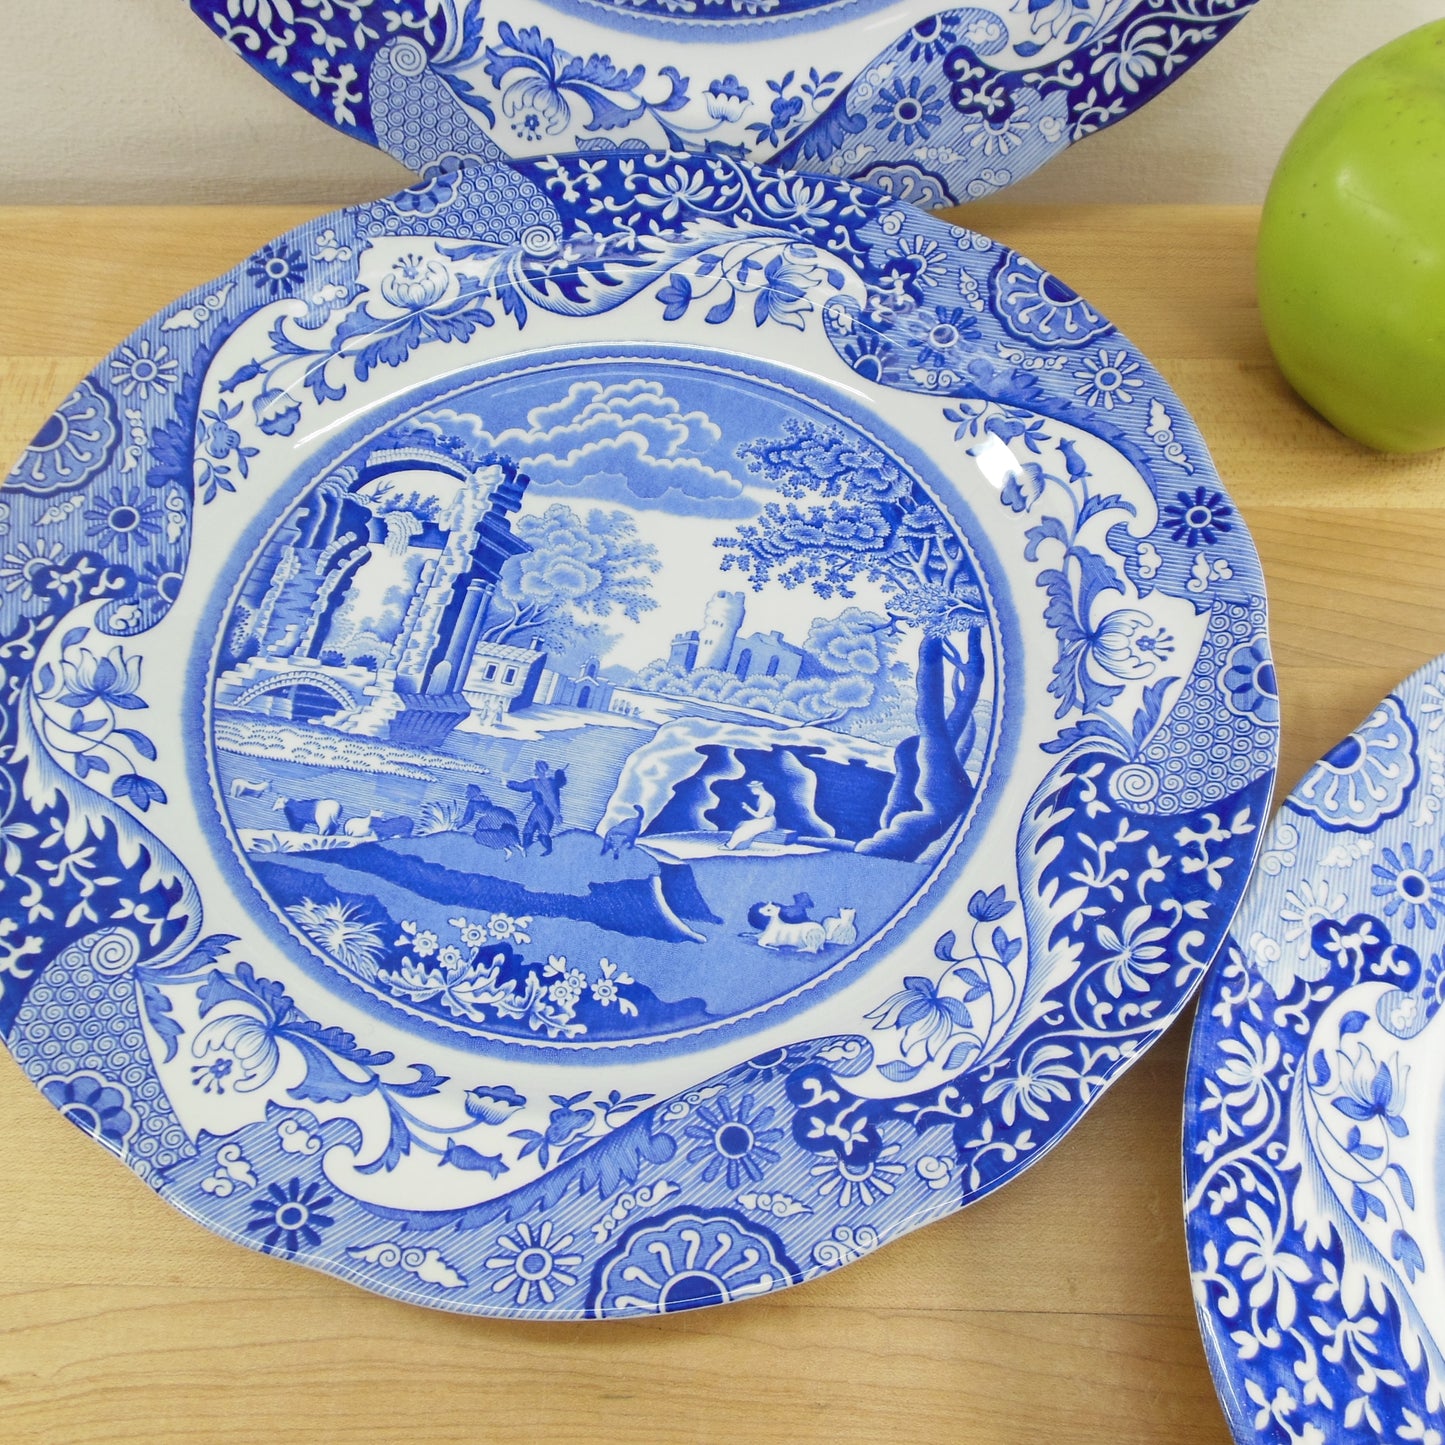 Spode England Blue Italian Dinner Plates - 3 Set Used